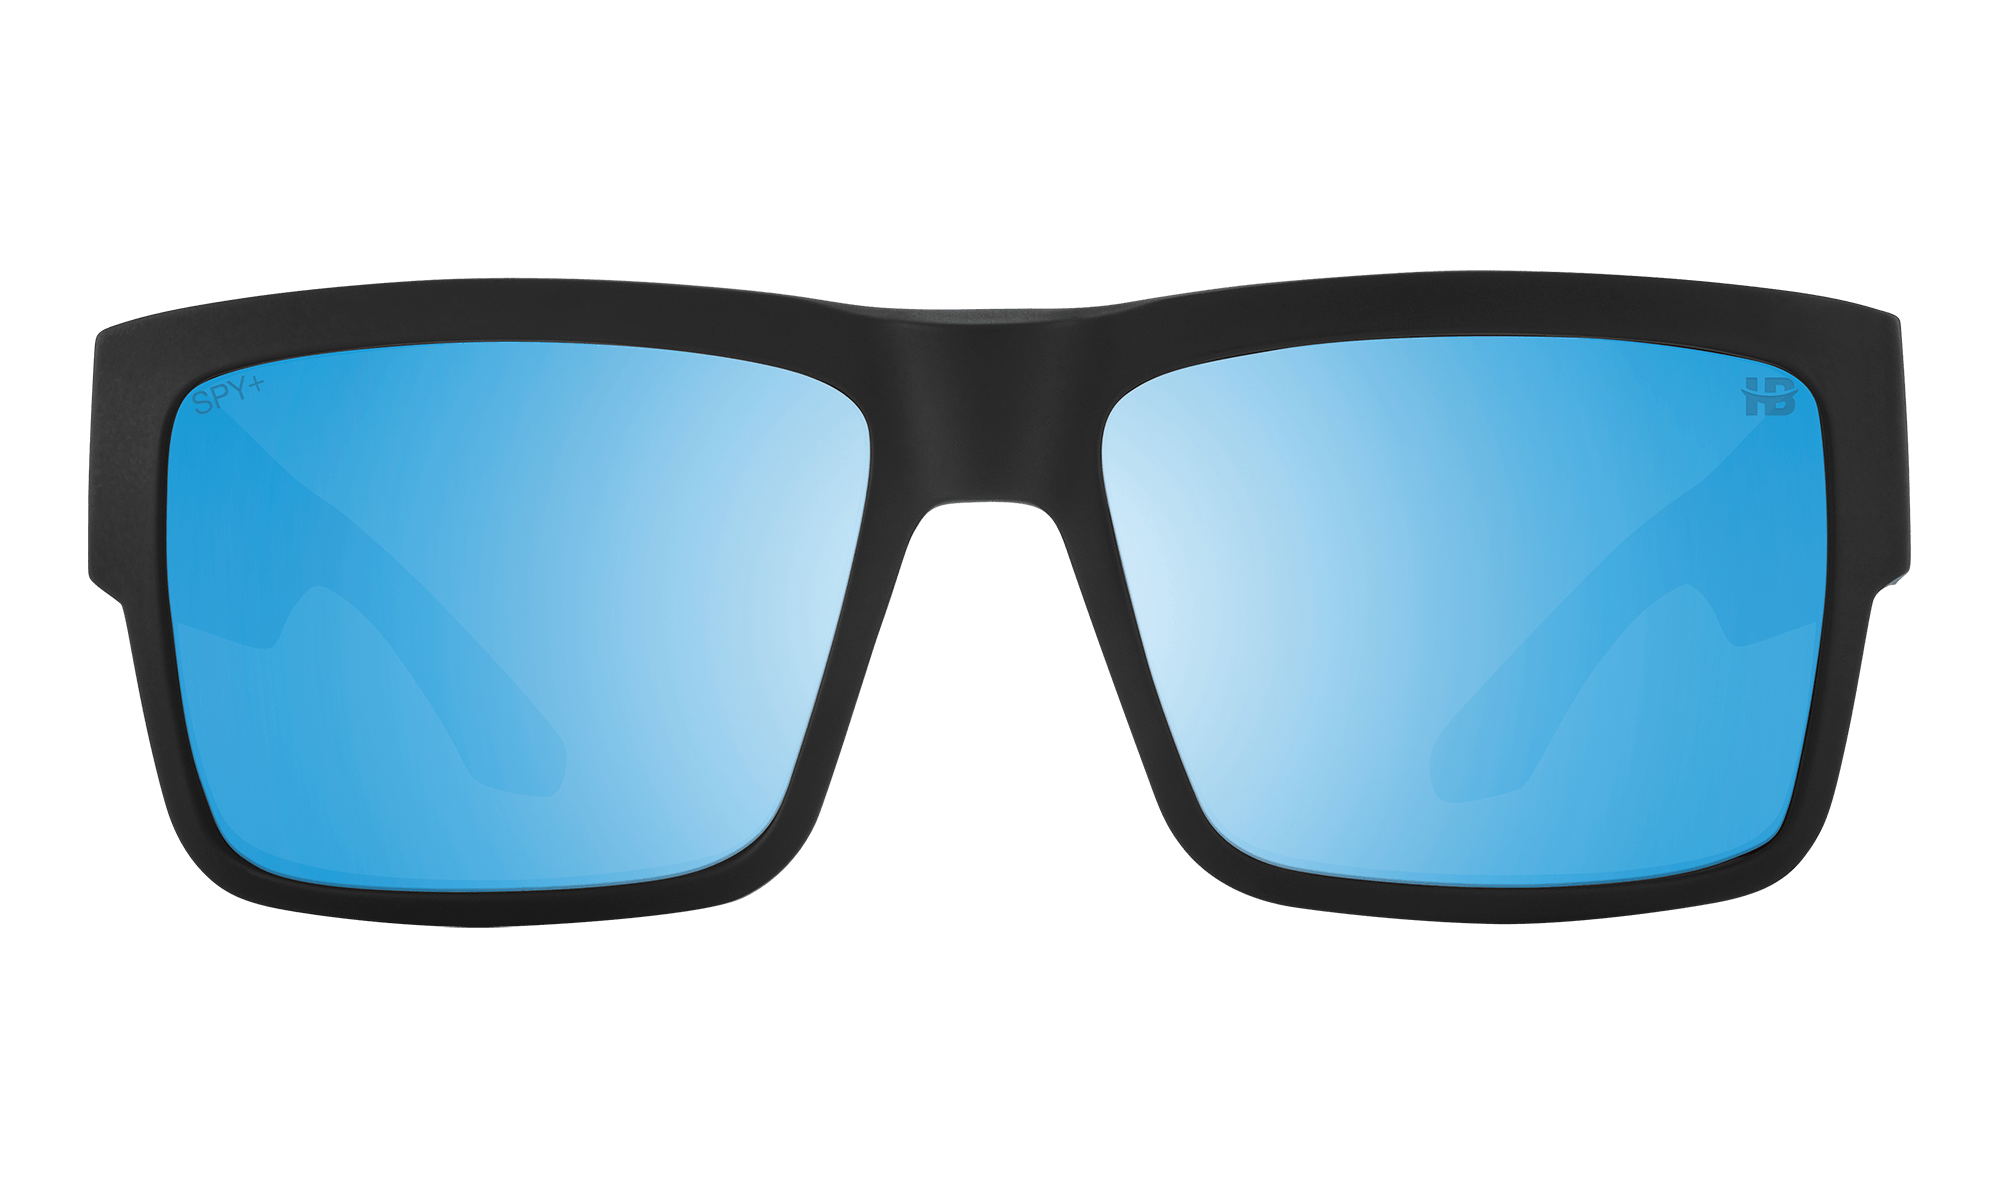 SPY Cyrus Matte Black - Happy Boost Bronze Ice Blue Spectra Mirror Polarized Sunglasses Sunglasses Spy 